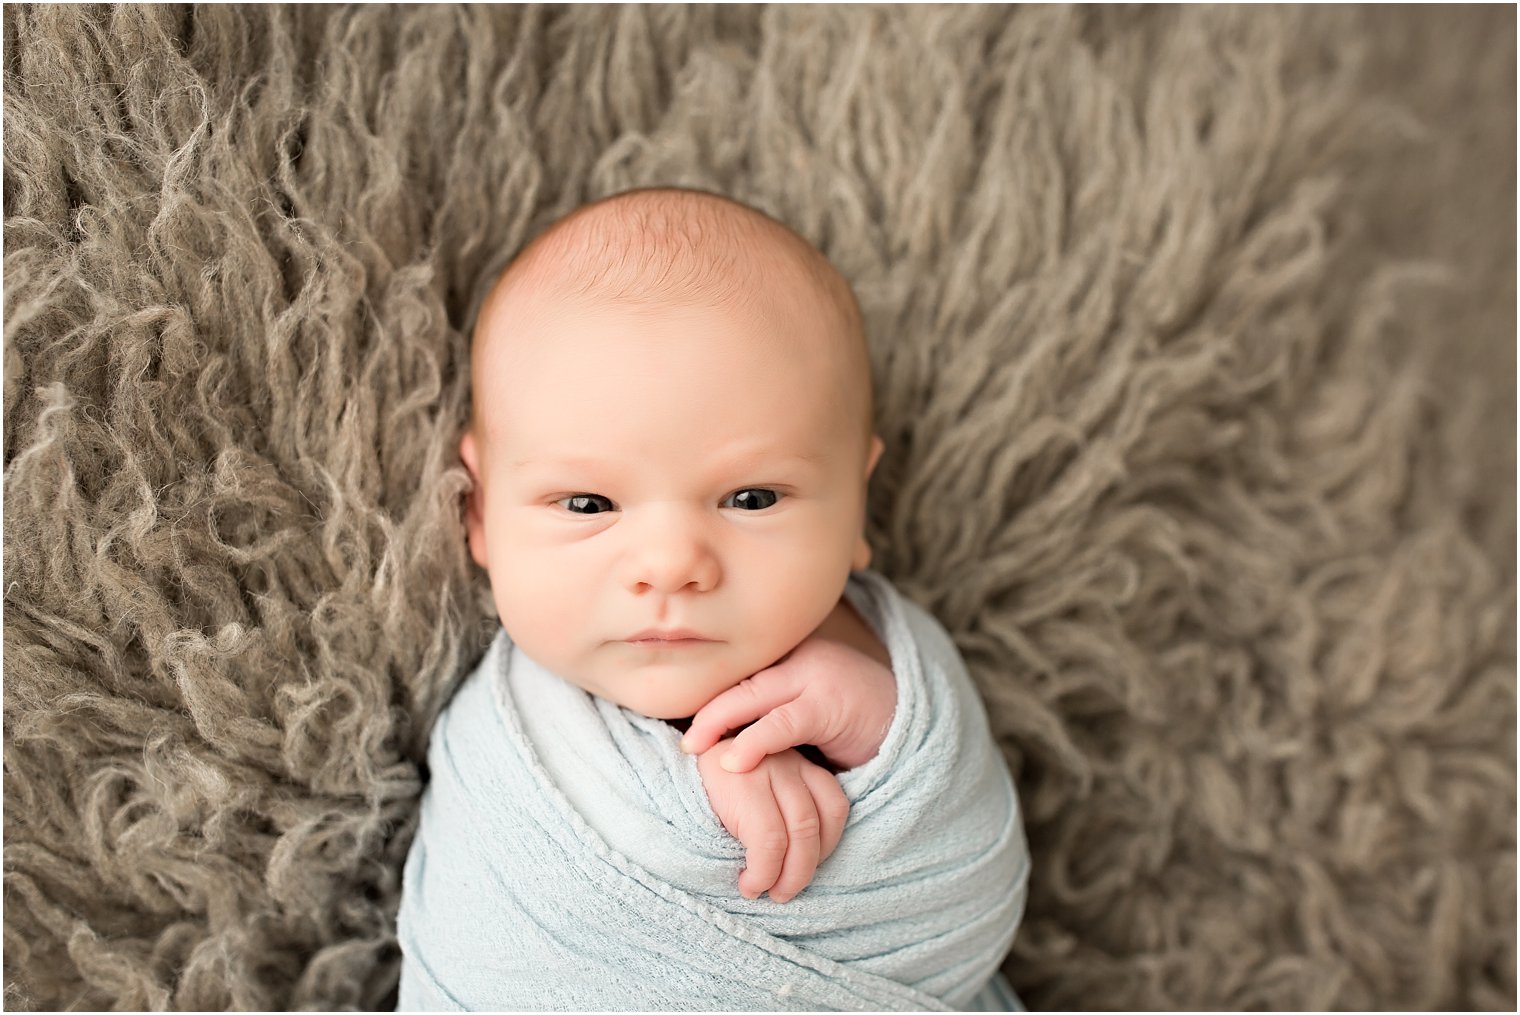 Newborn boy with his eyes open